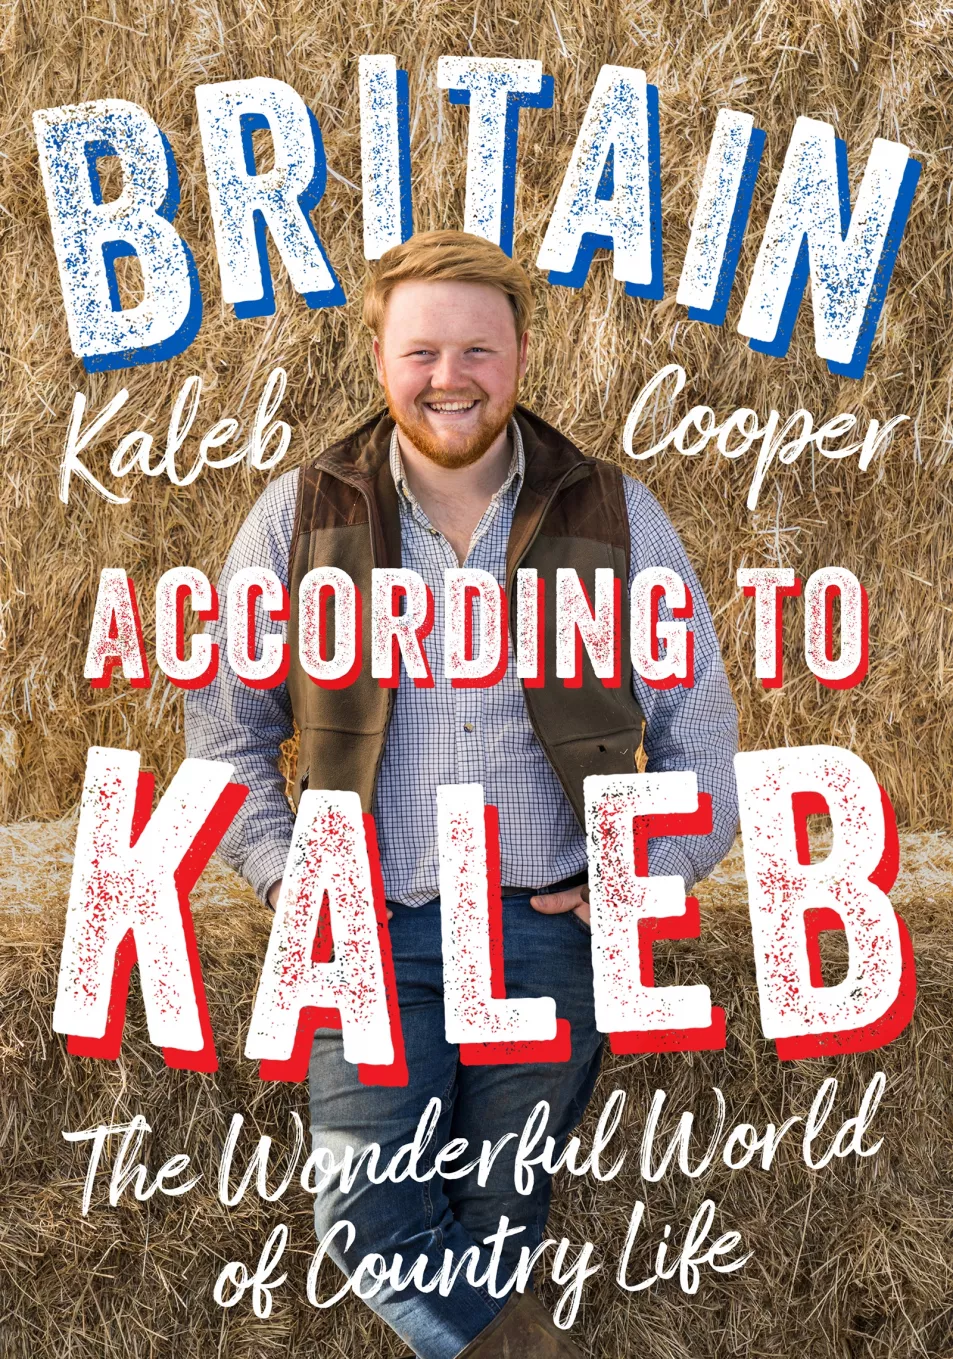 Britain According to Kaleb by Kaleb Cooper (Quercus)